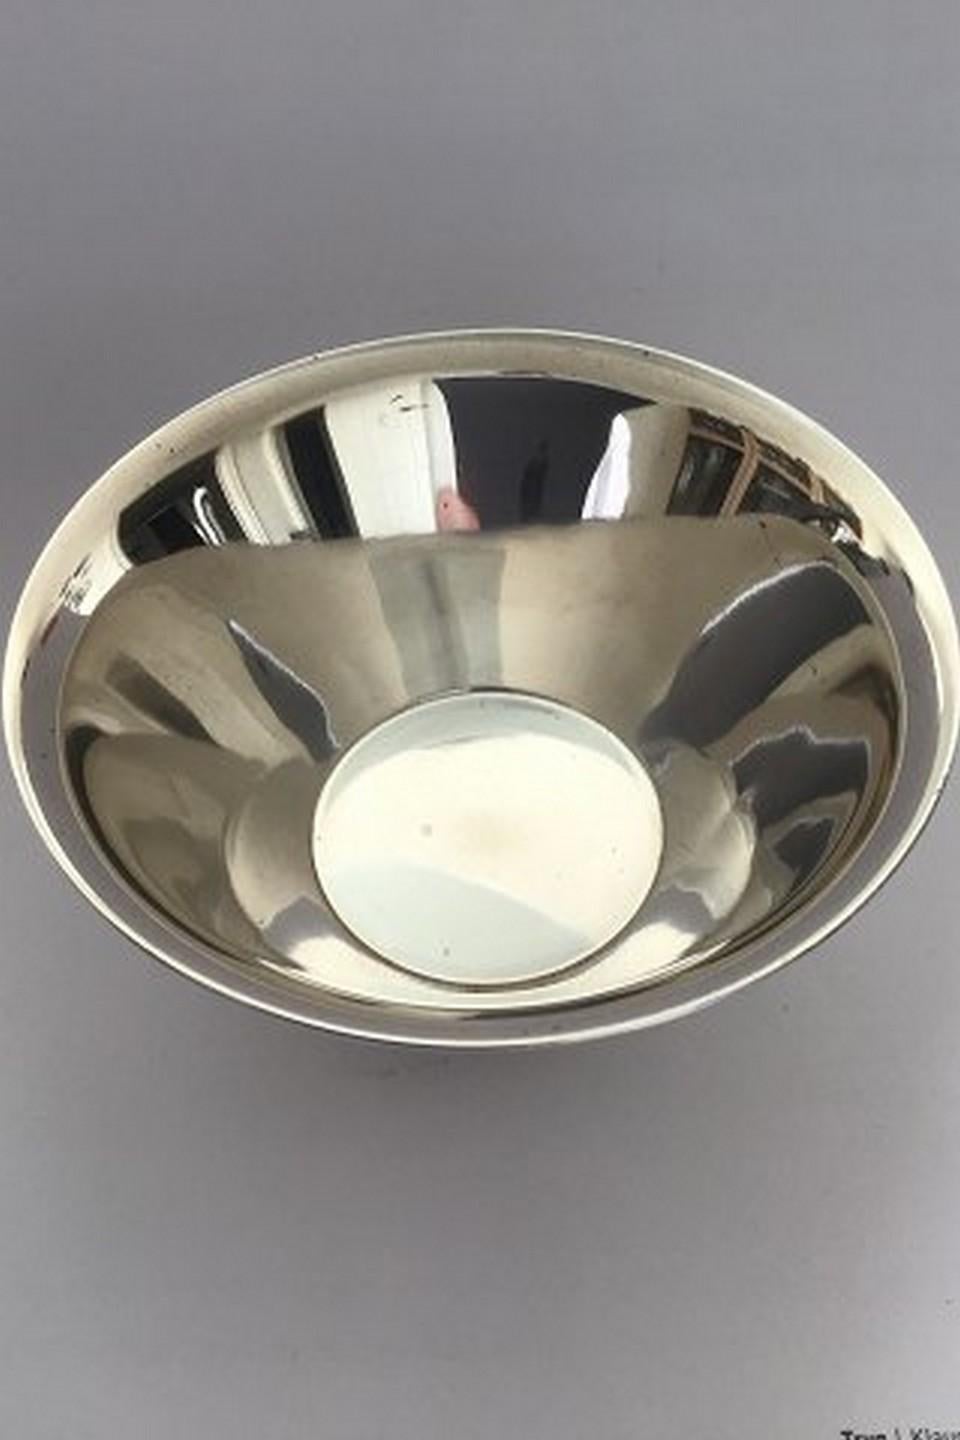 Georg Jensen sterling silver pyramid sugar bowl No 600C
Measures: Height 5.5 cm (2 11/64 in), diameter 10.3 cm(4 1/16 in)
Item no.: 398916.